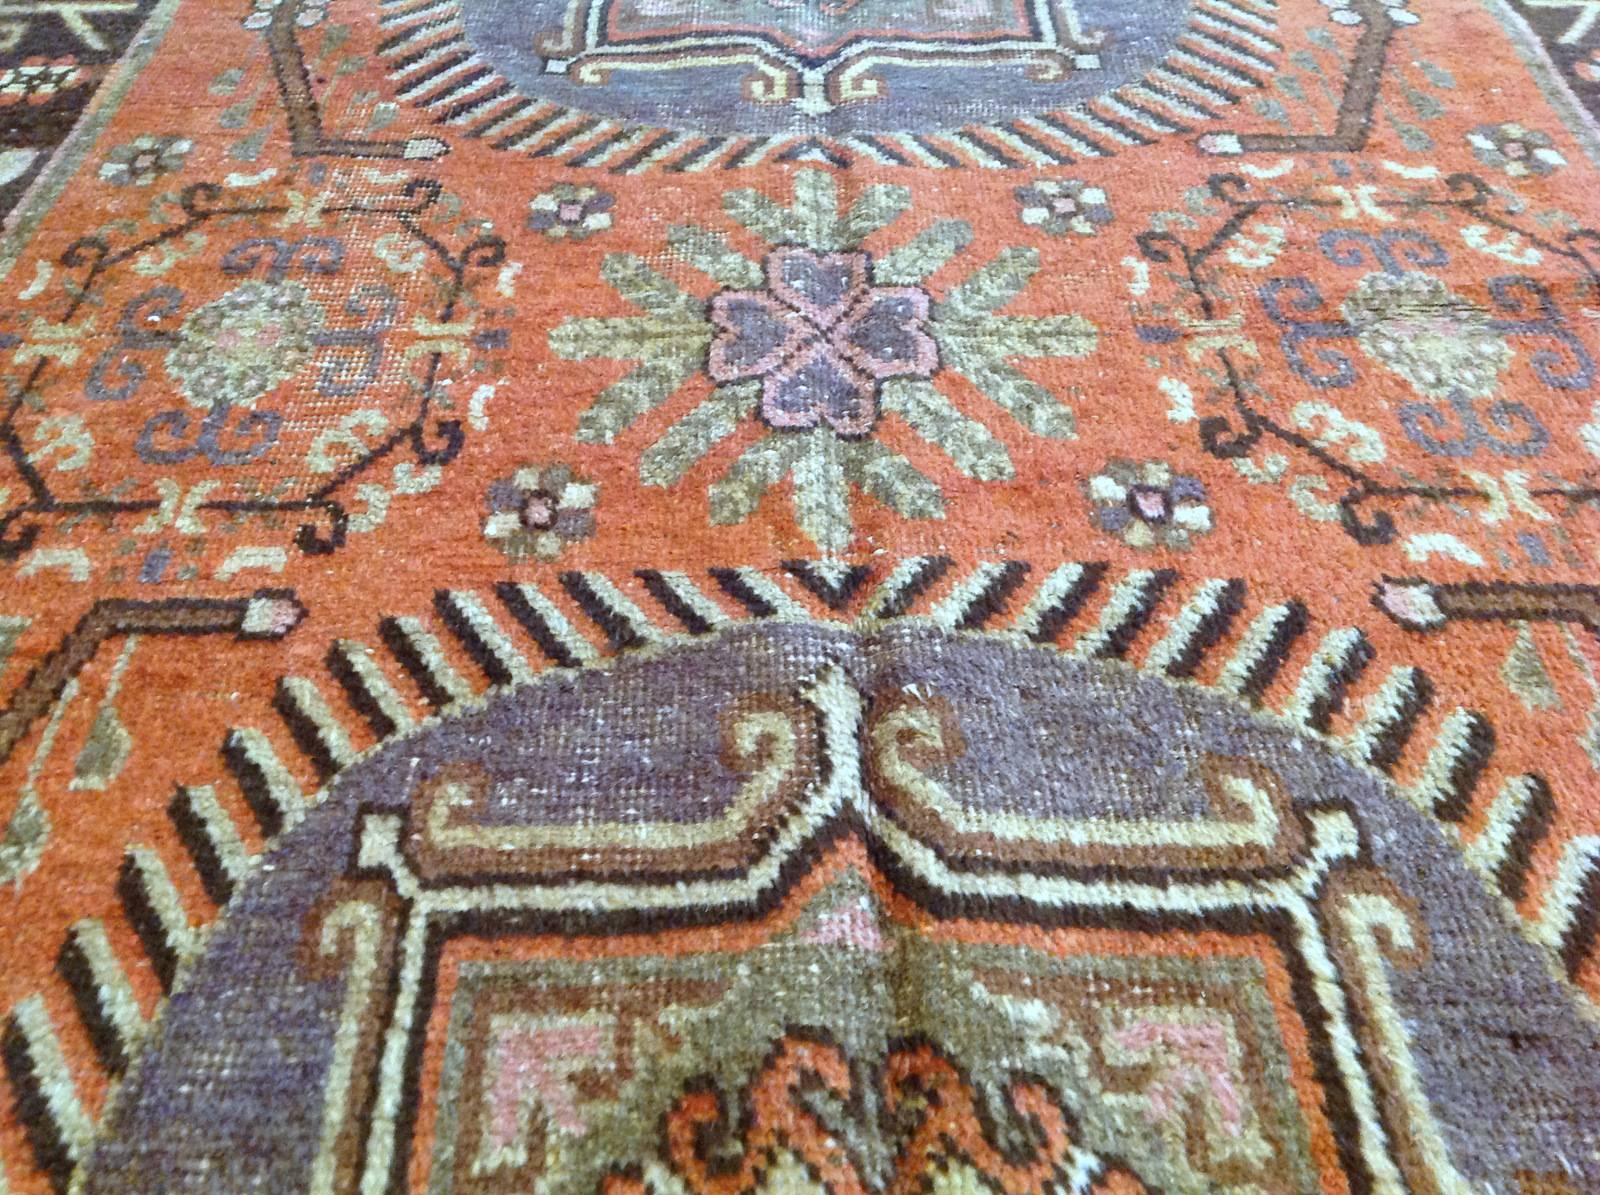 Vintage Khotan rug 
Measures: 4'11